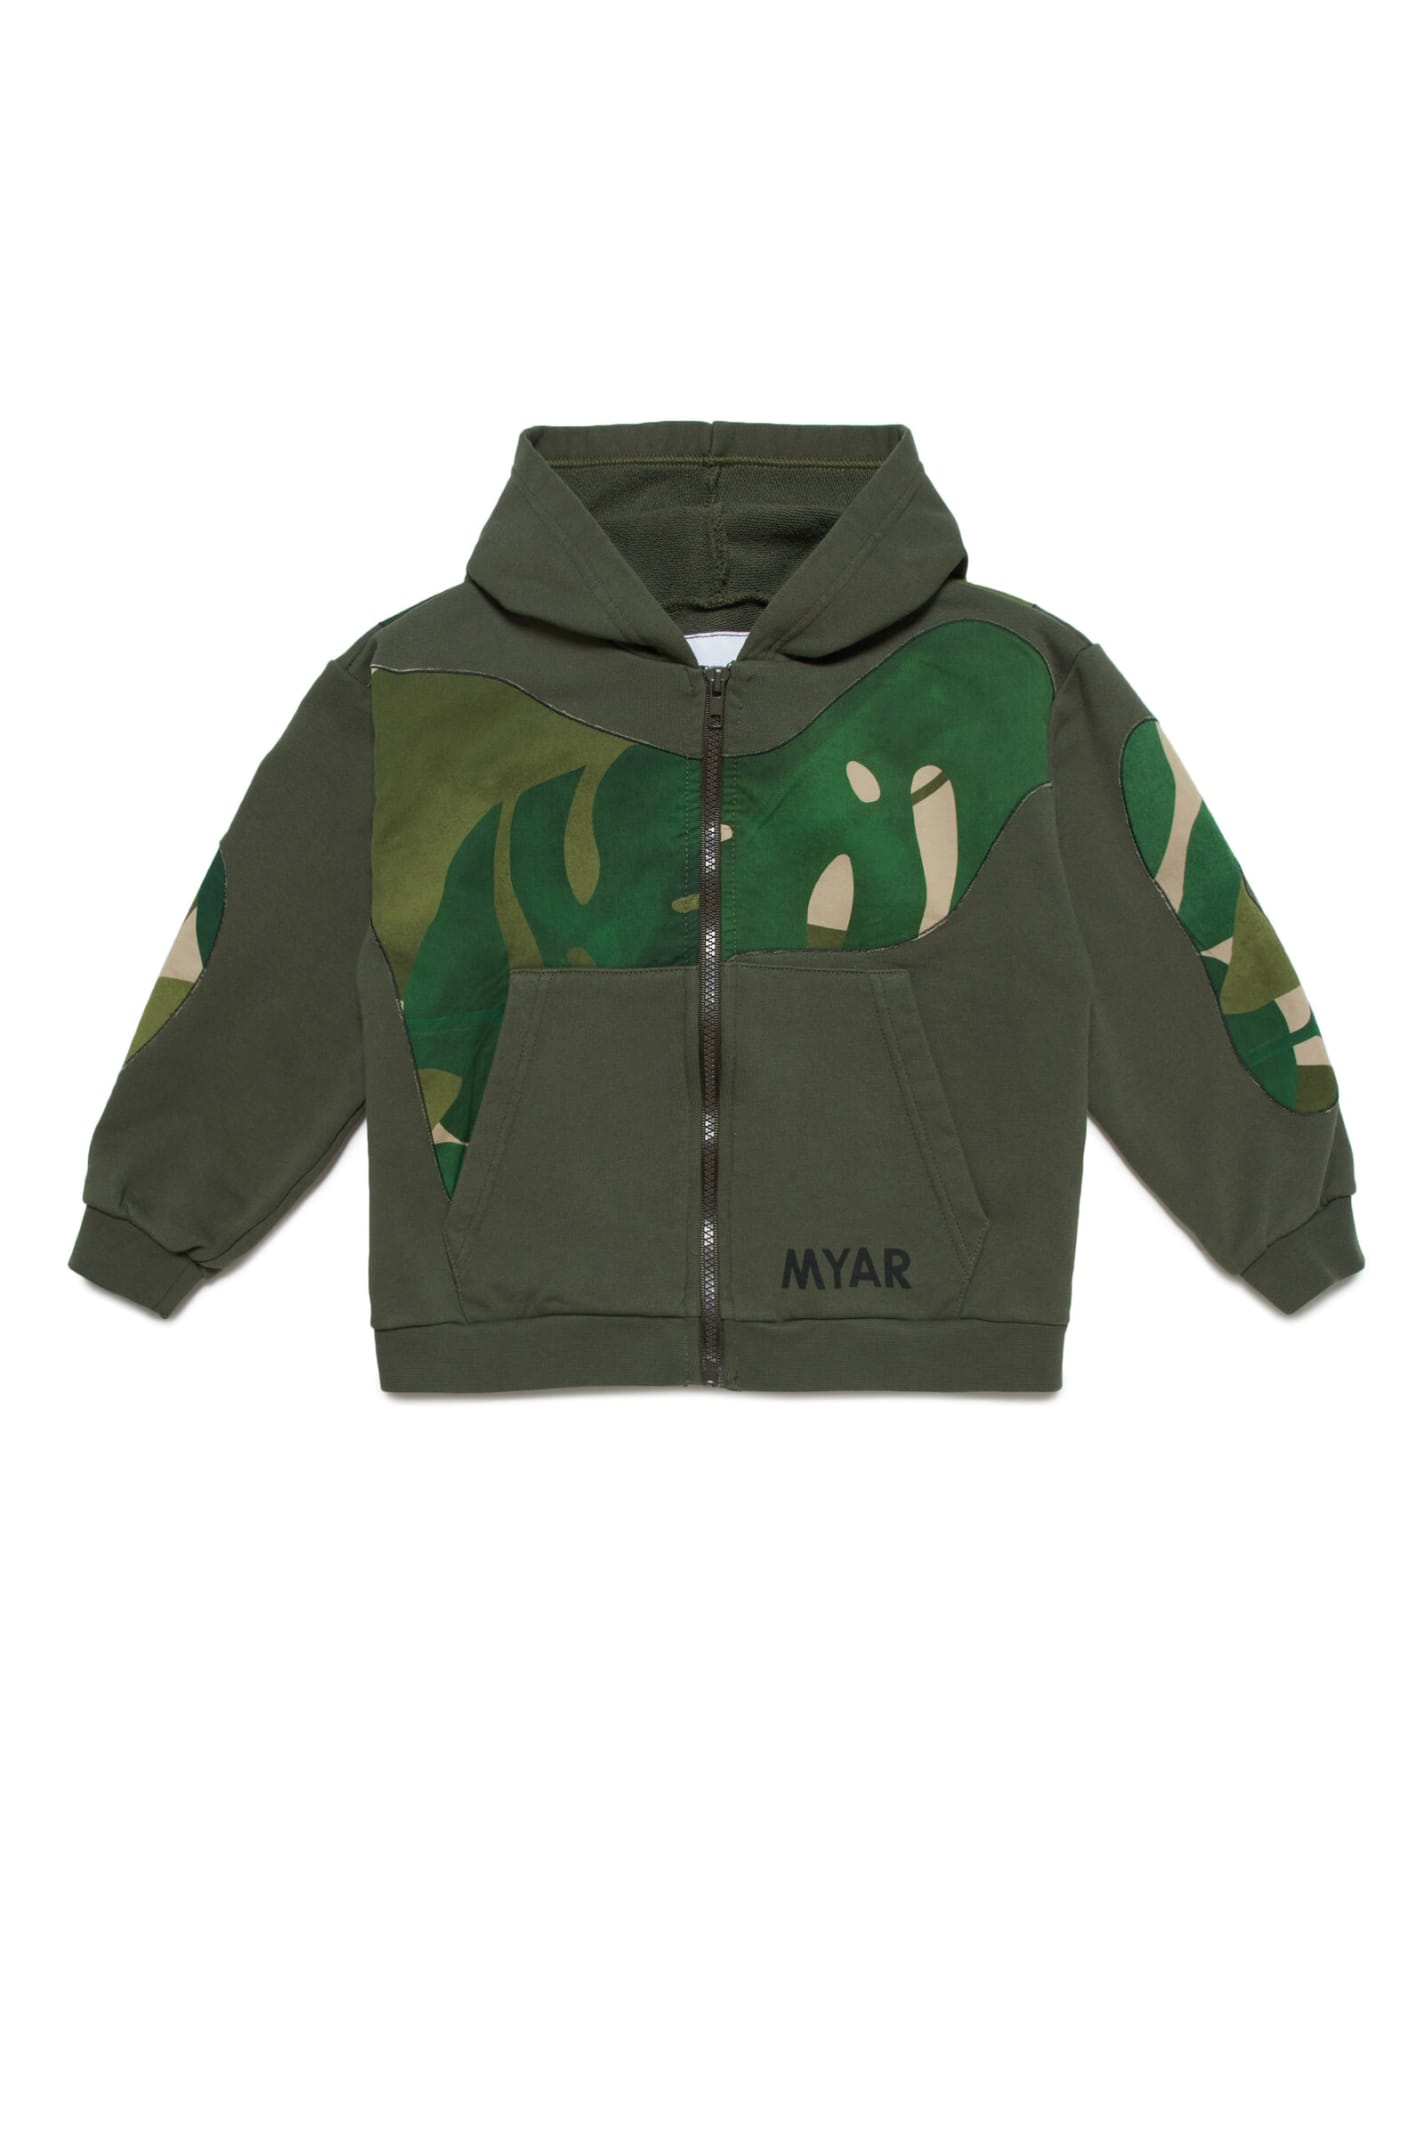 MYAR Mys19u Sweat-shirt Myar Sweatshirt With Hood, Zip And Applications Deadstock Fabric Rainforest Pattern